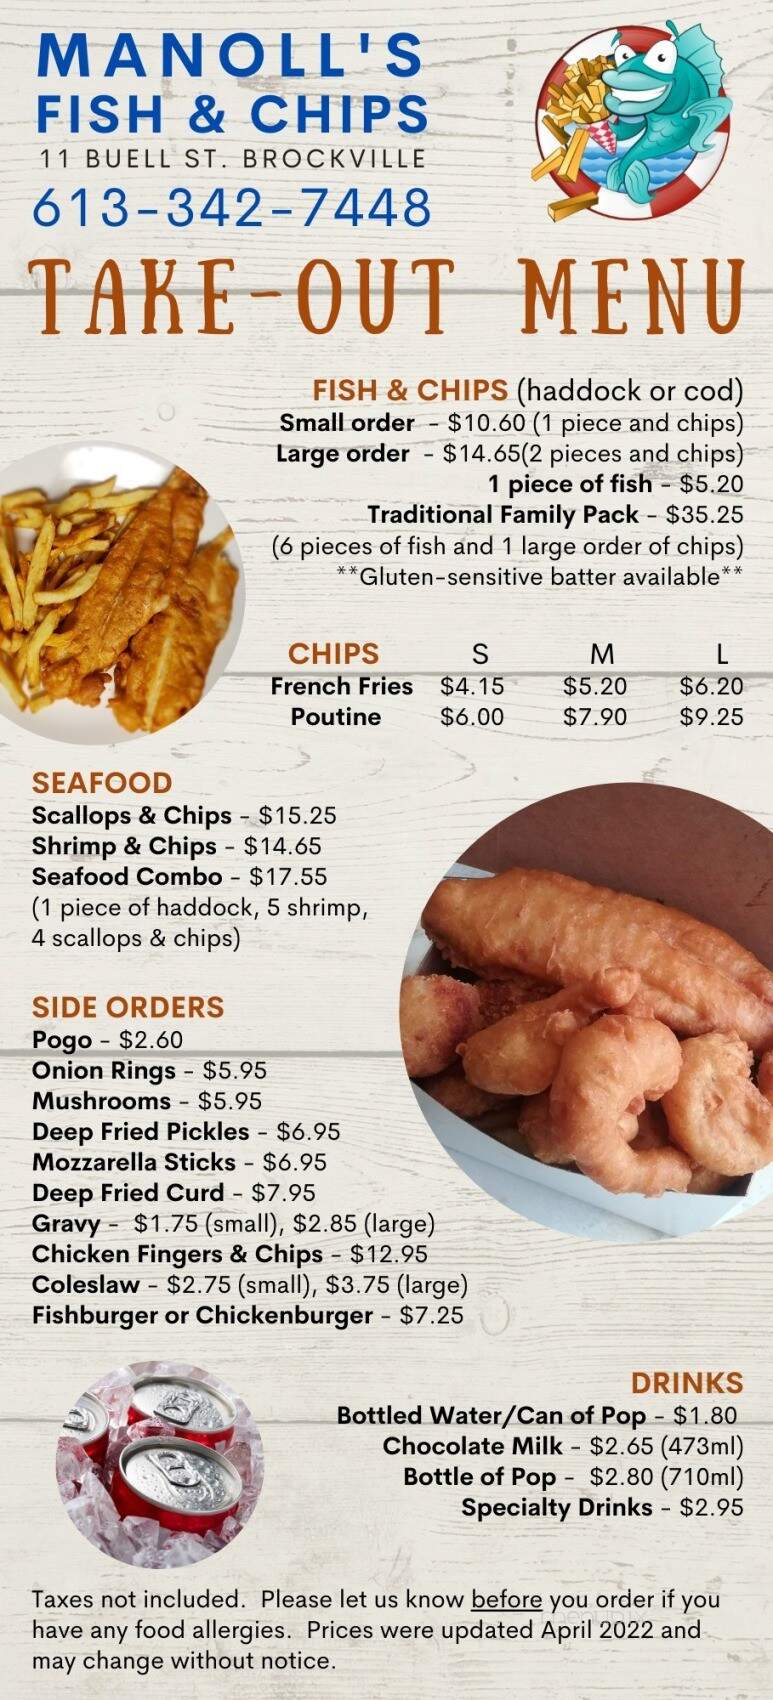 Manoll's Fish & Chips - Brockville, ON